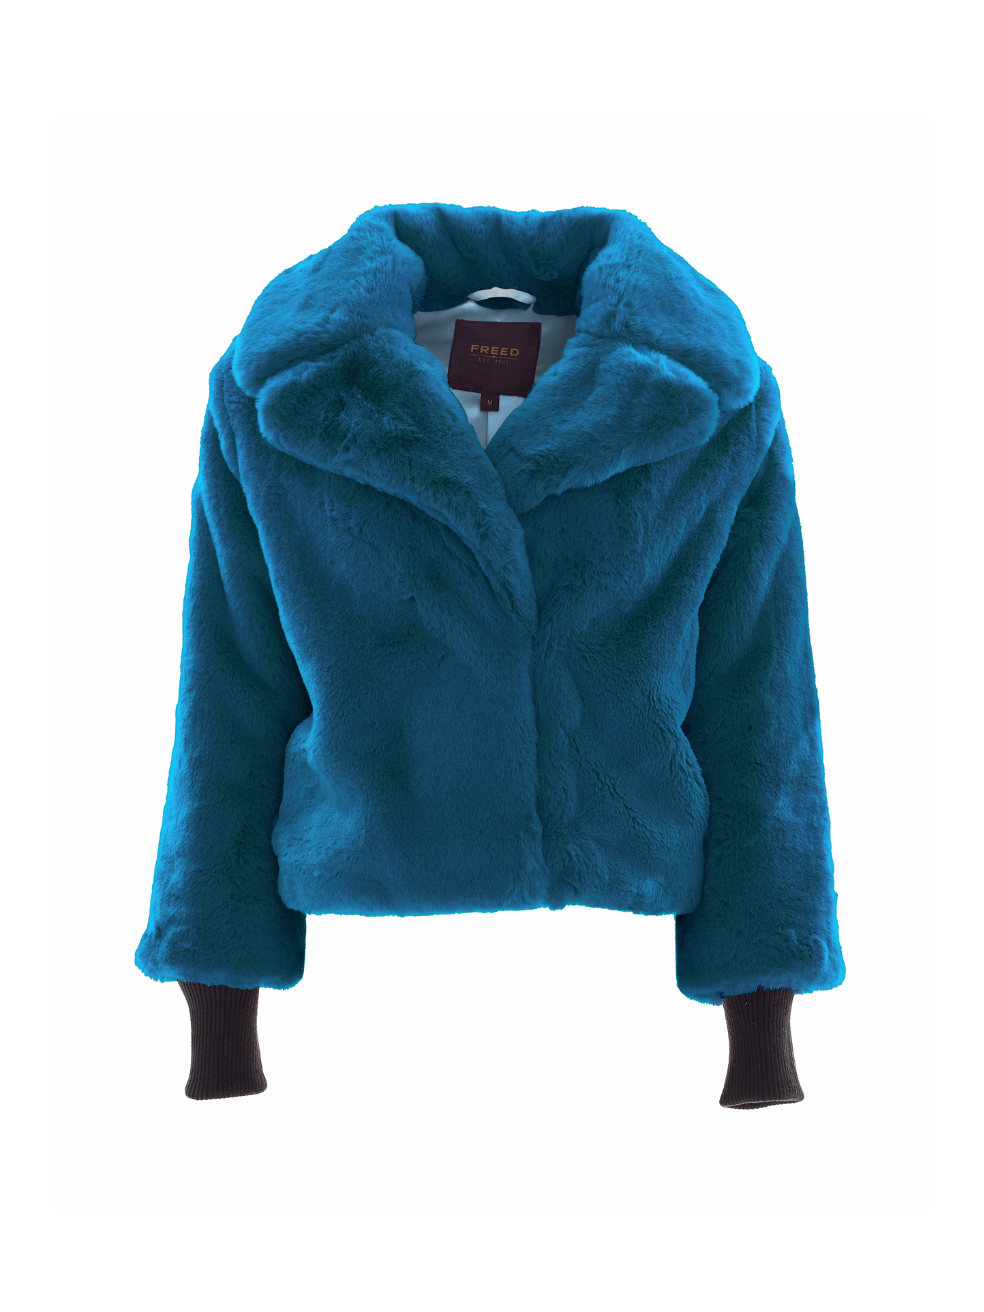 Peacock Blue Sawyer Luxury Outerwear Faux Fur Cropped Coat Zero Waste Fashion Teal